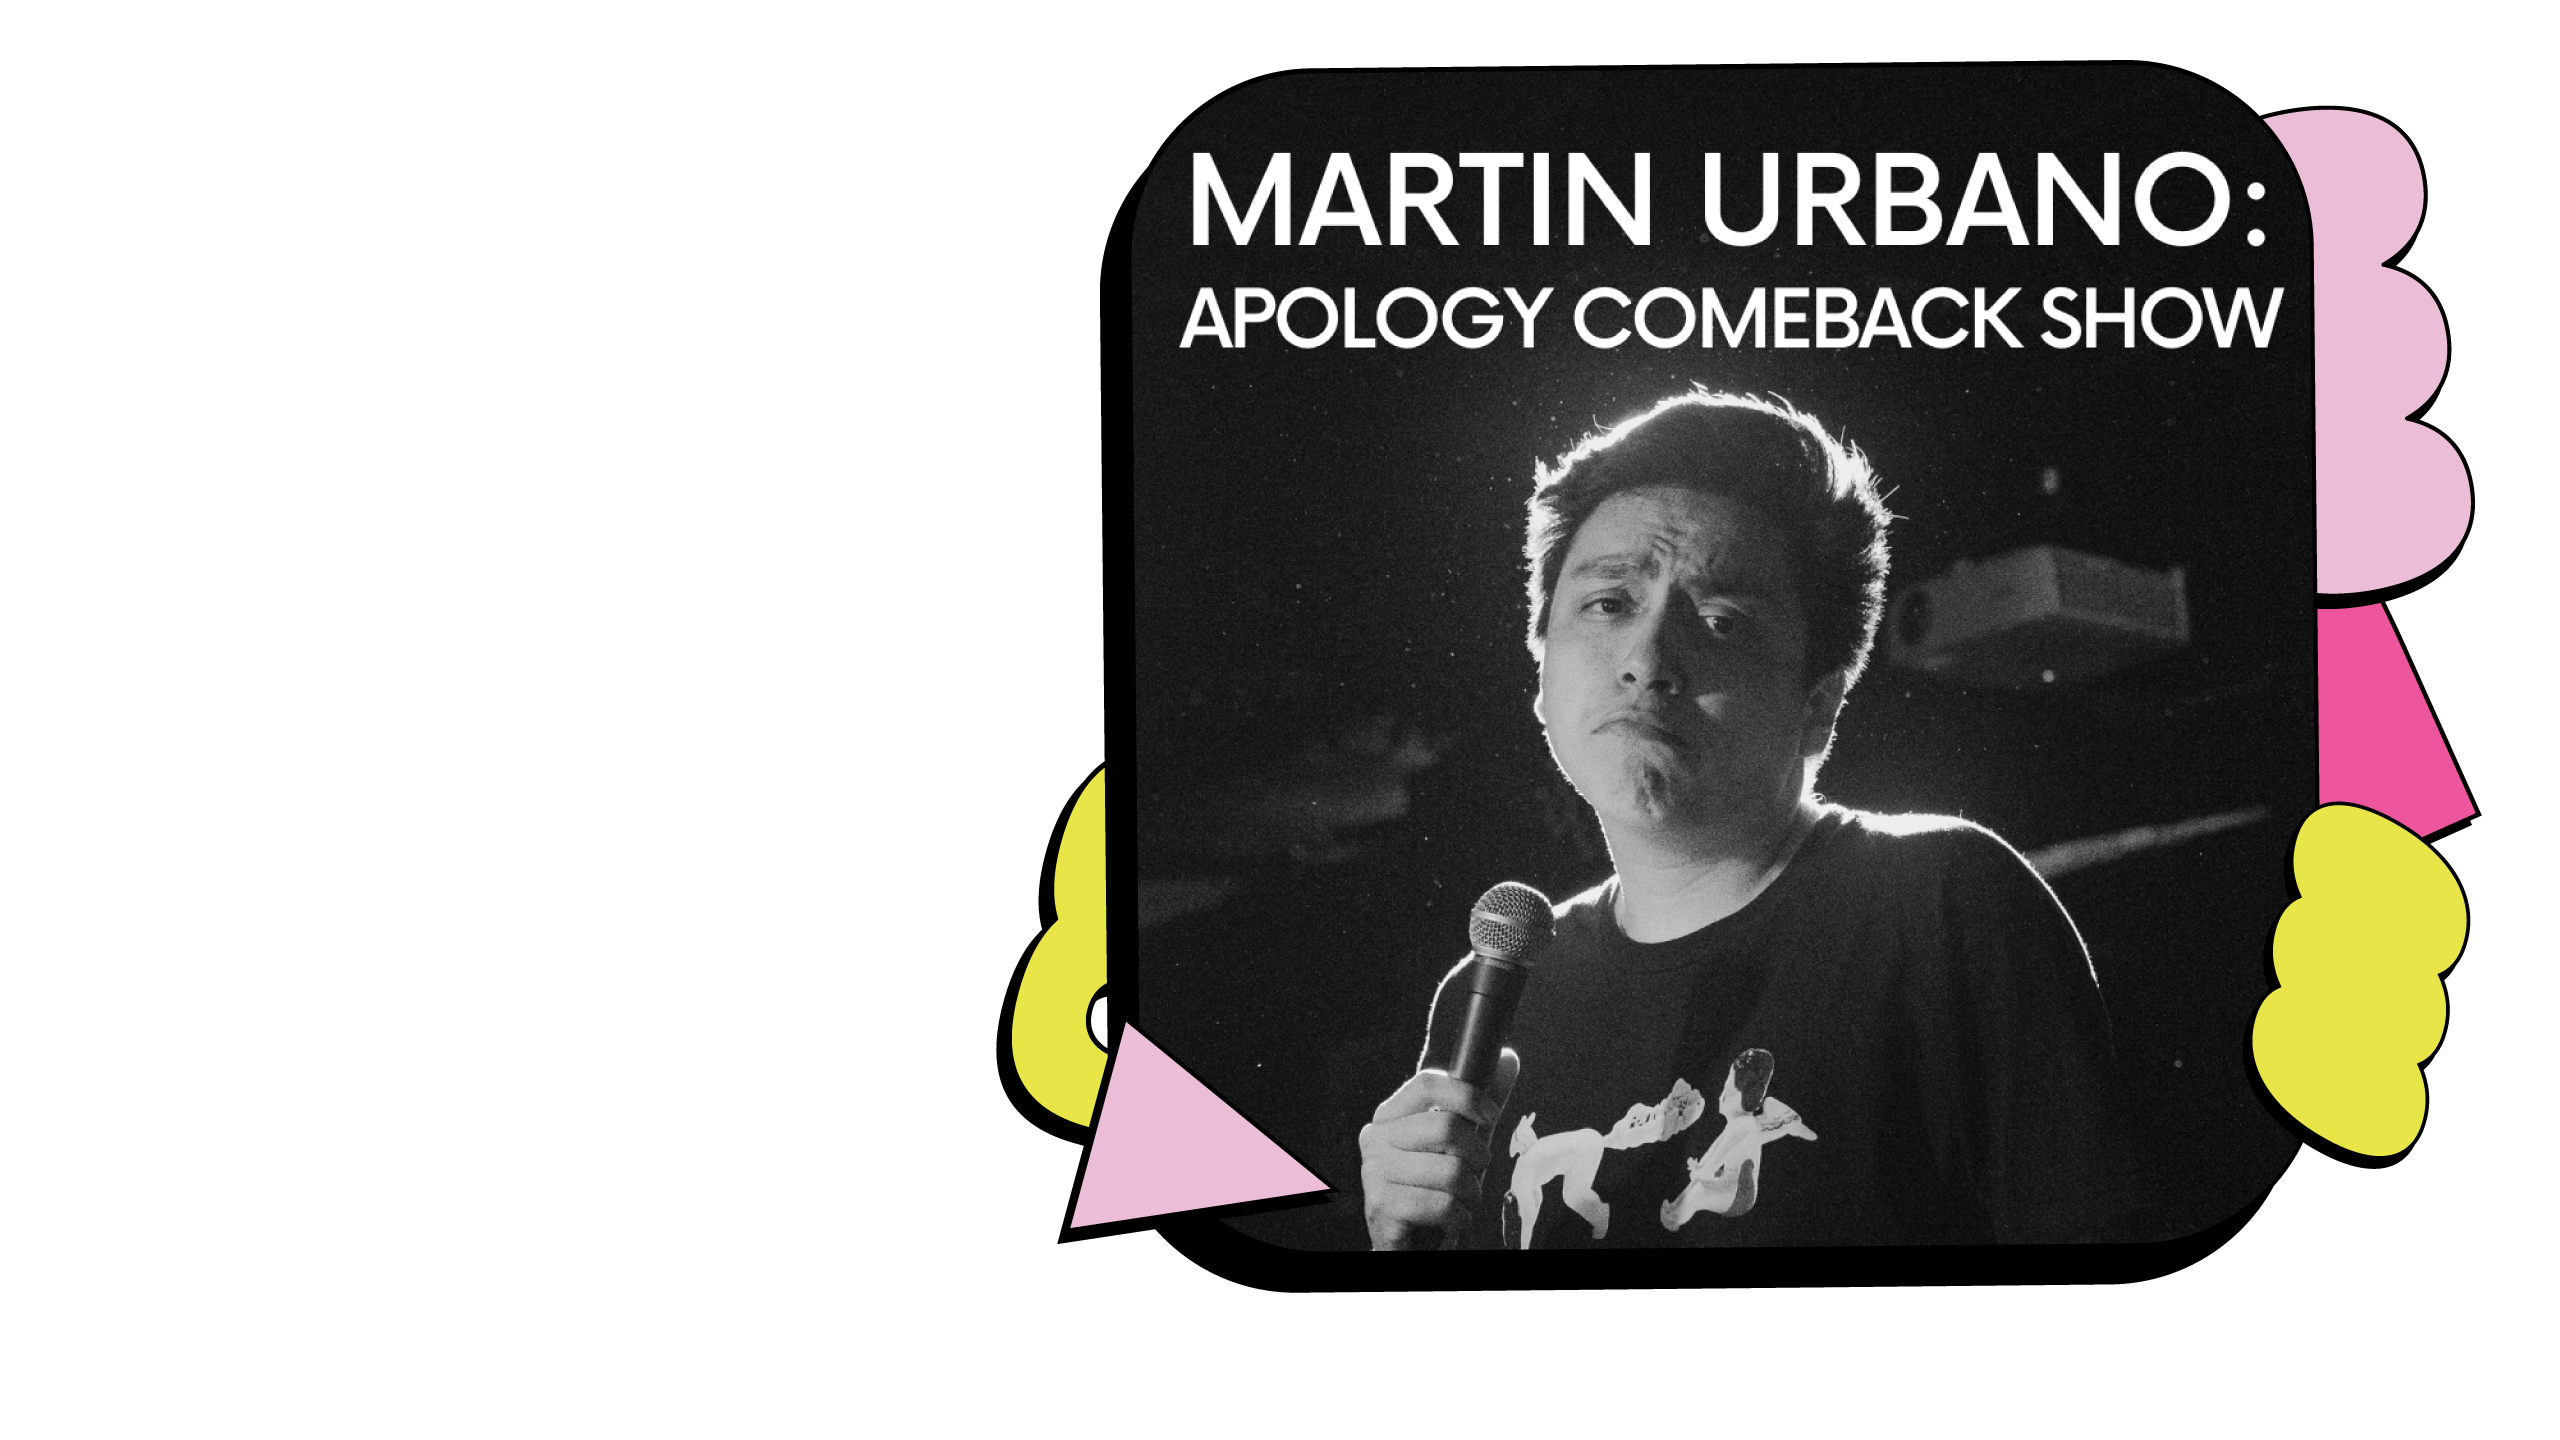 Promotional image for Martin Urbano: Apology Comeback Show